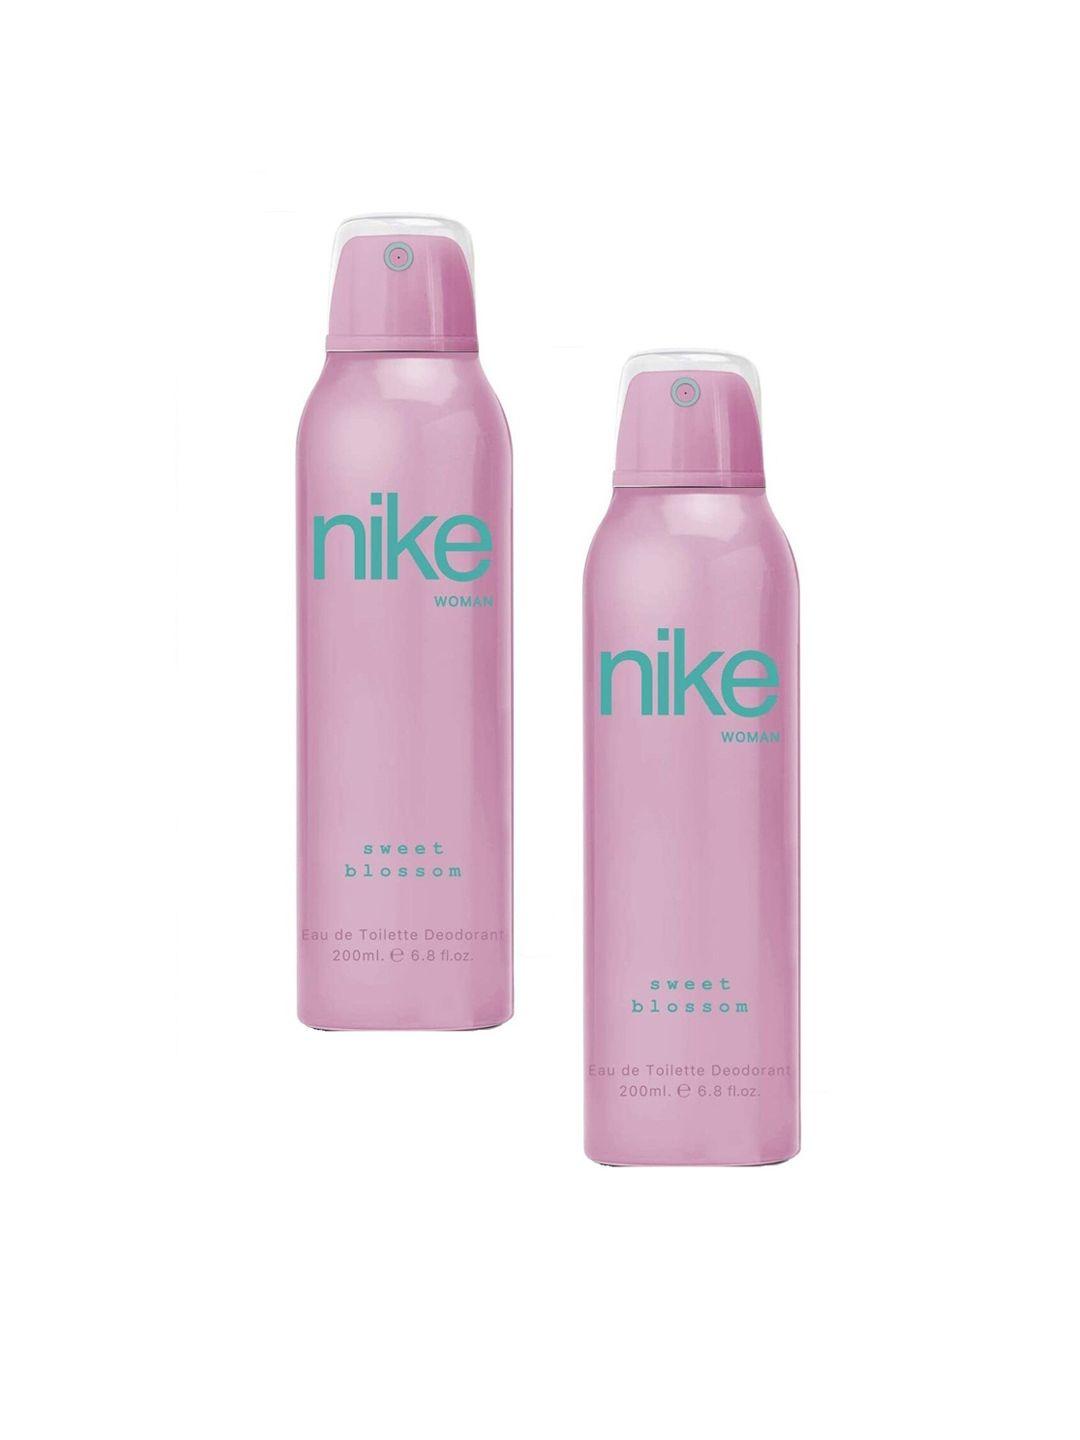 nike-women-pack-of-2-sweet-blossom-deodorant---200ml-each